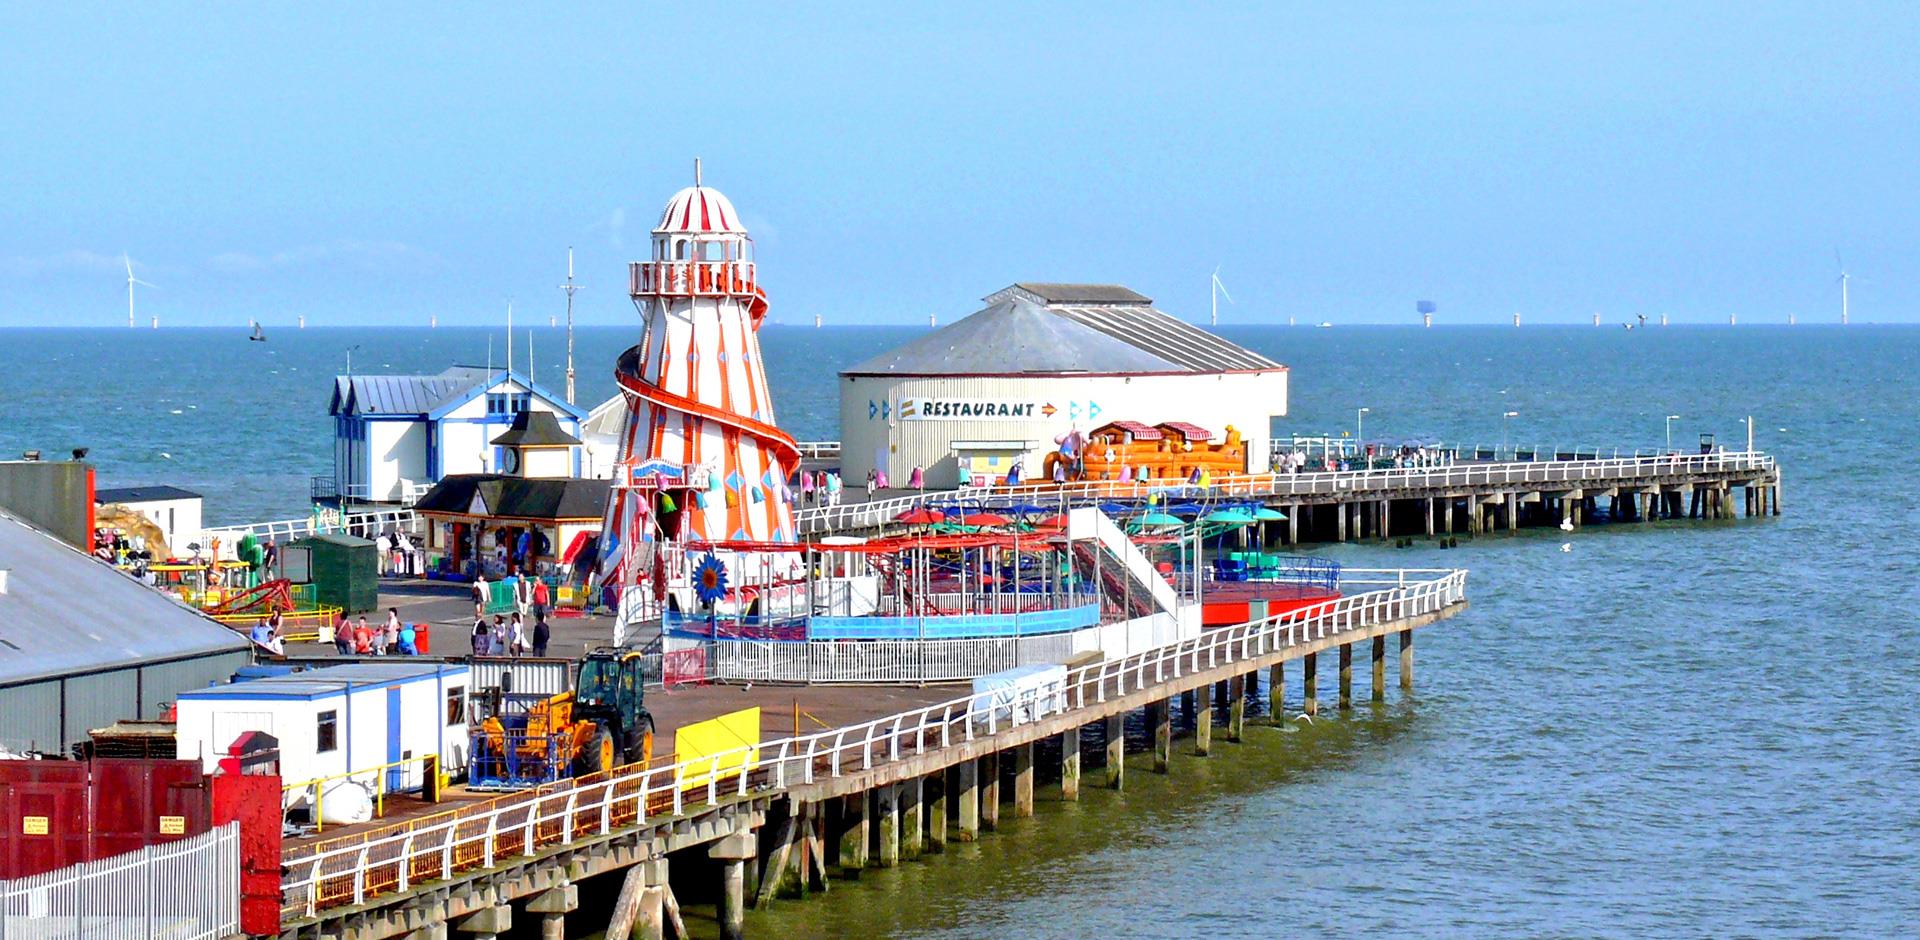 Pier in Clacton-on-Sea, Essex, UK.